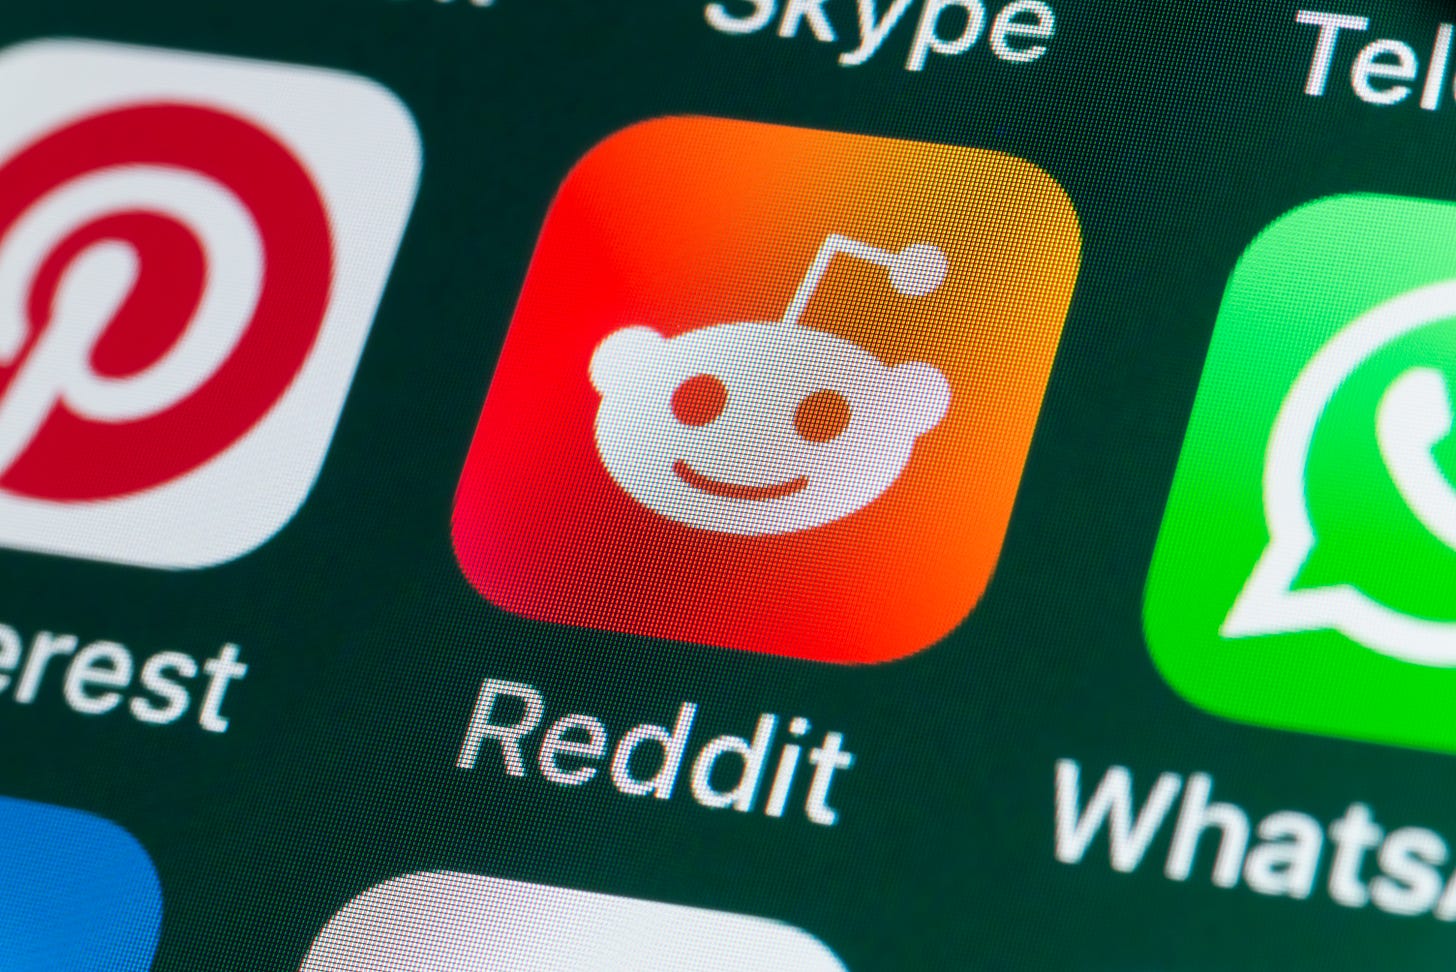 Reddit became popular among retail investors